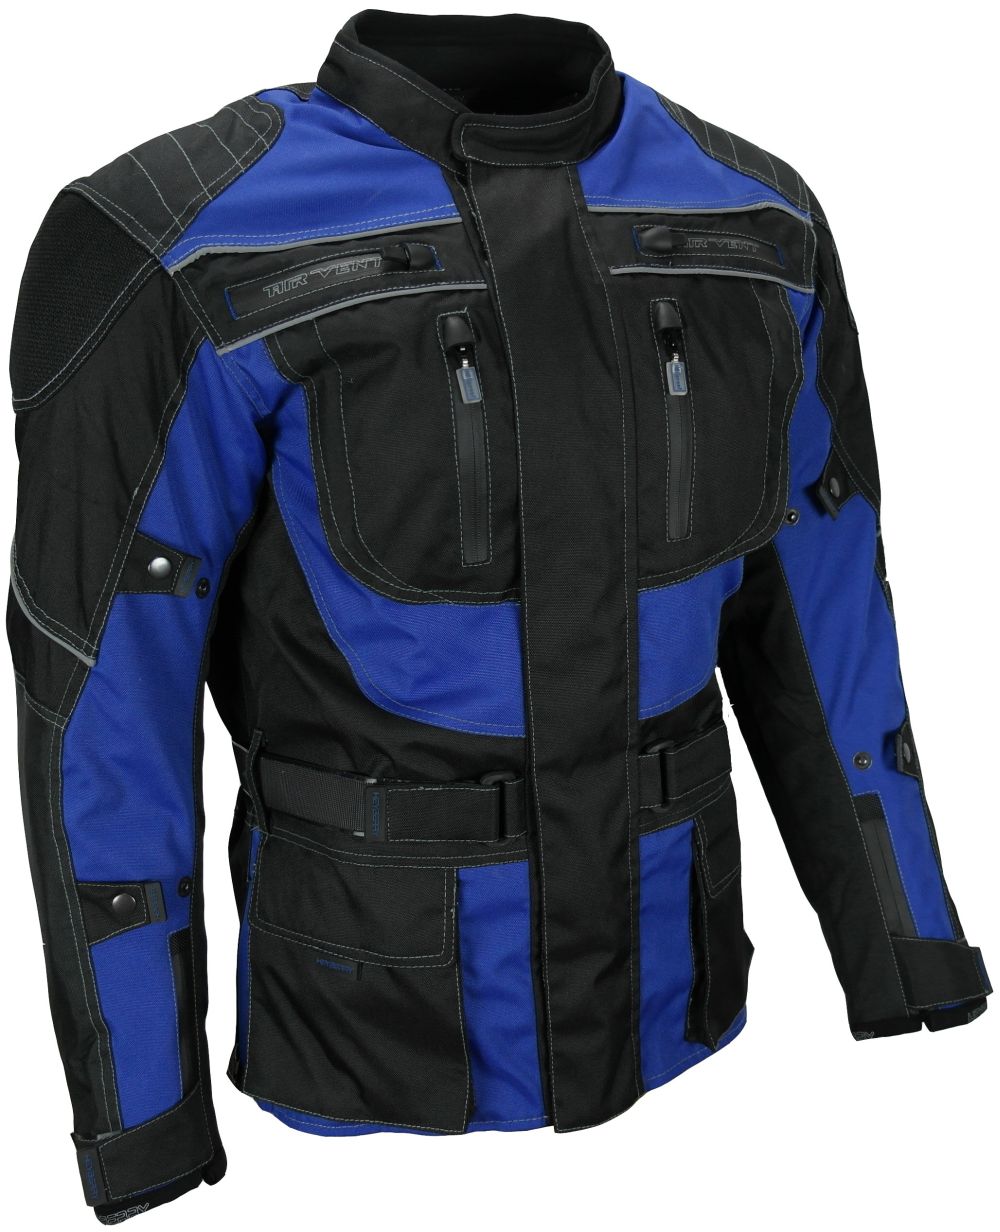 Heyberry Touren Motorrad Jacke Motorradjacke Textil schwarz blau M - 3XL